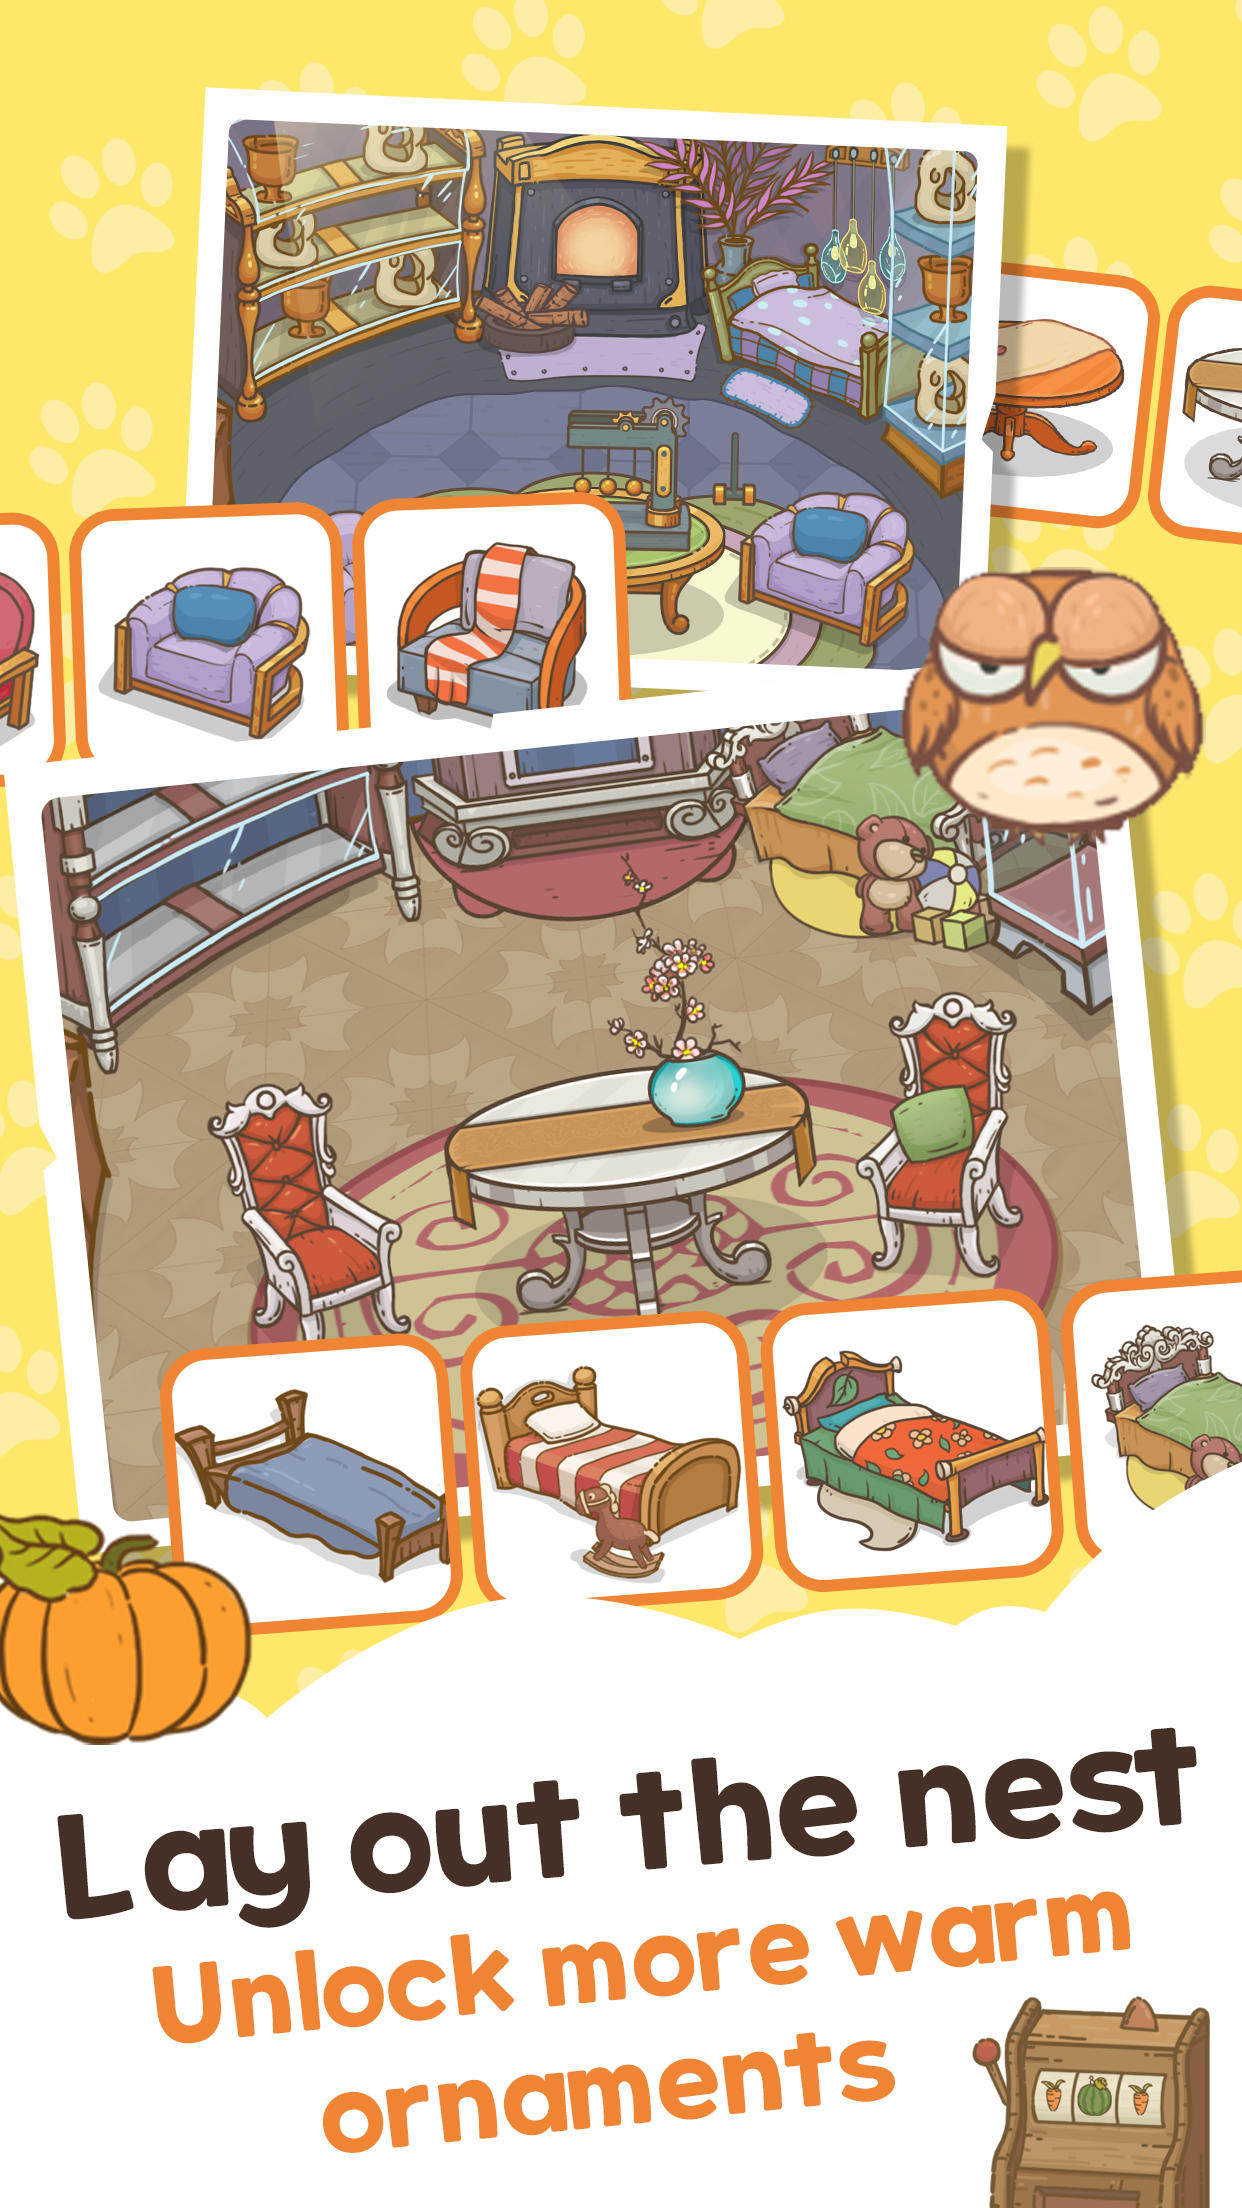 Ollie's Manor: Pet Farm Sim ภาพหน้าจอเกม